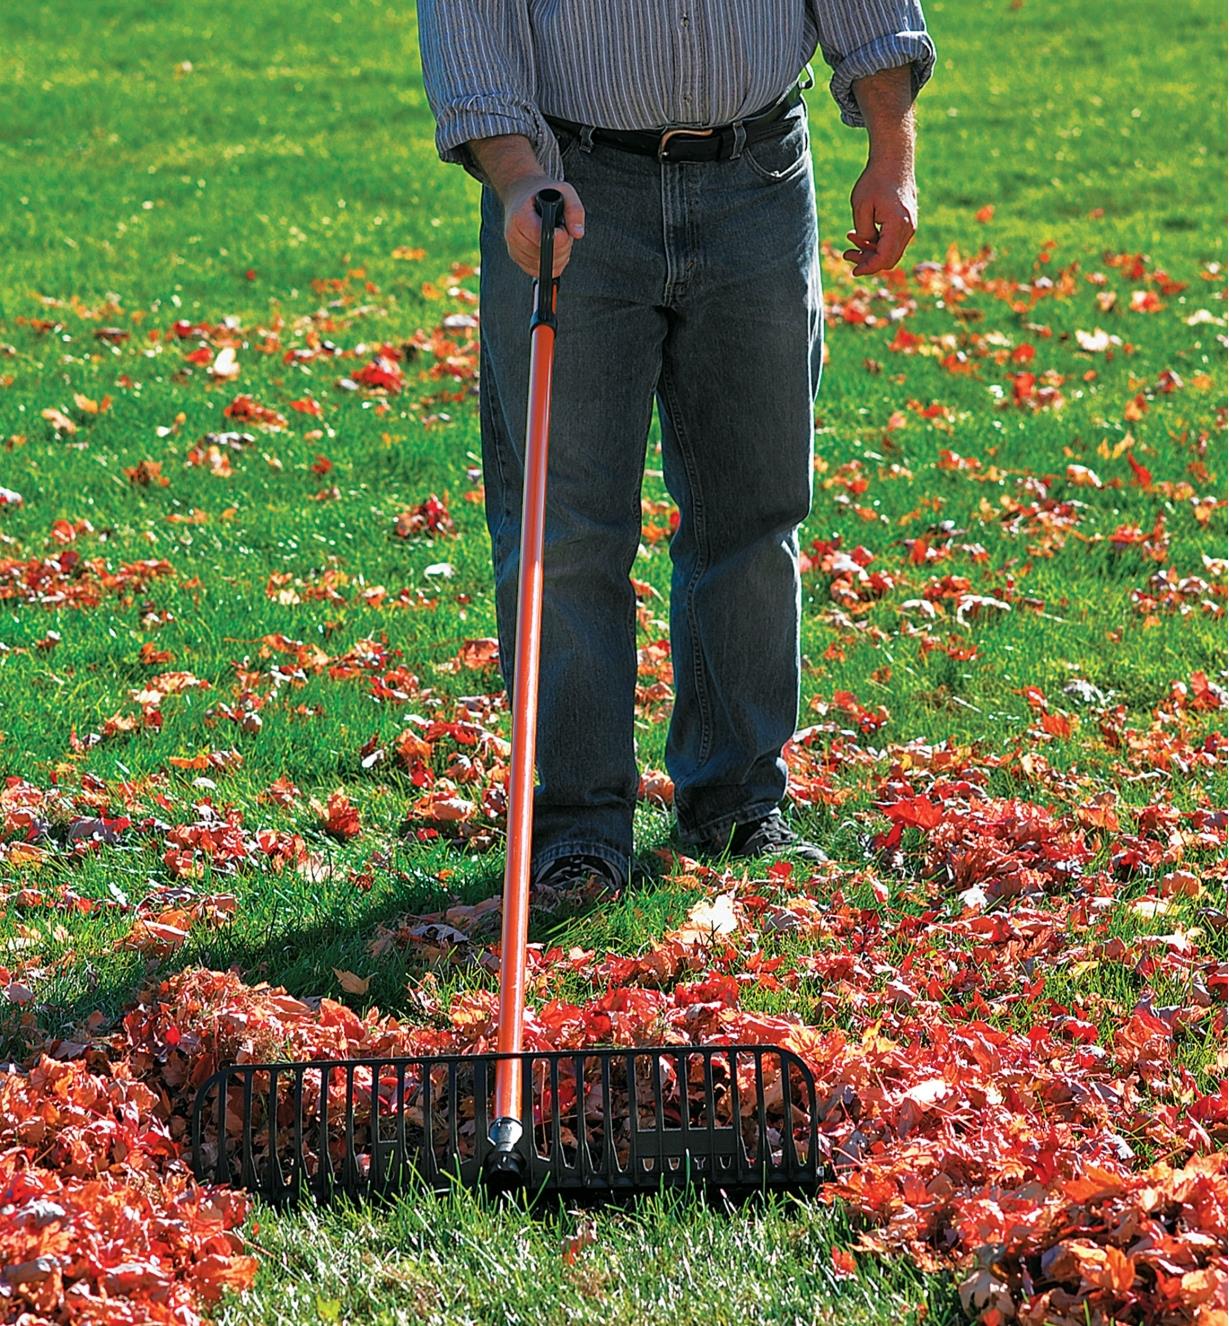 A man uses a Power Rake to rake leaves